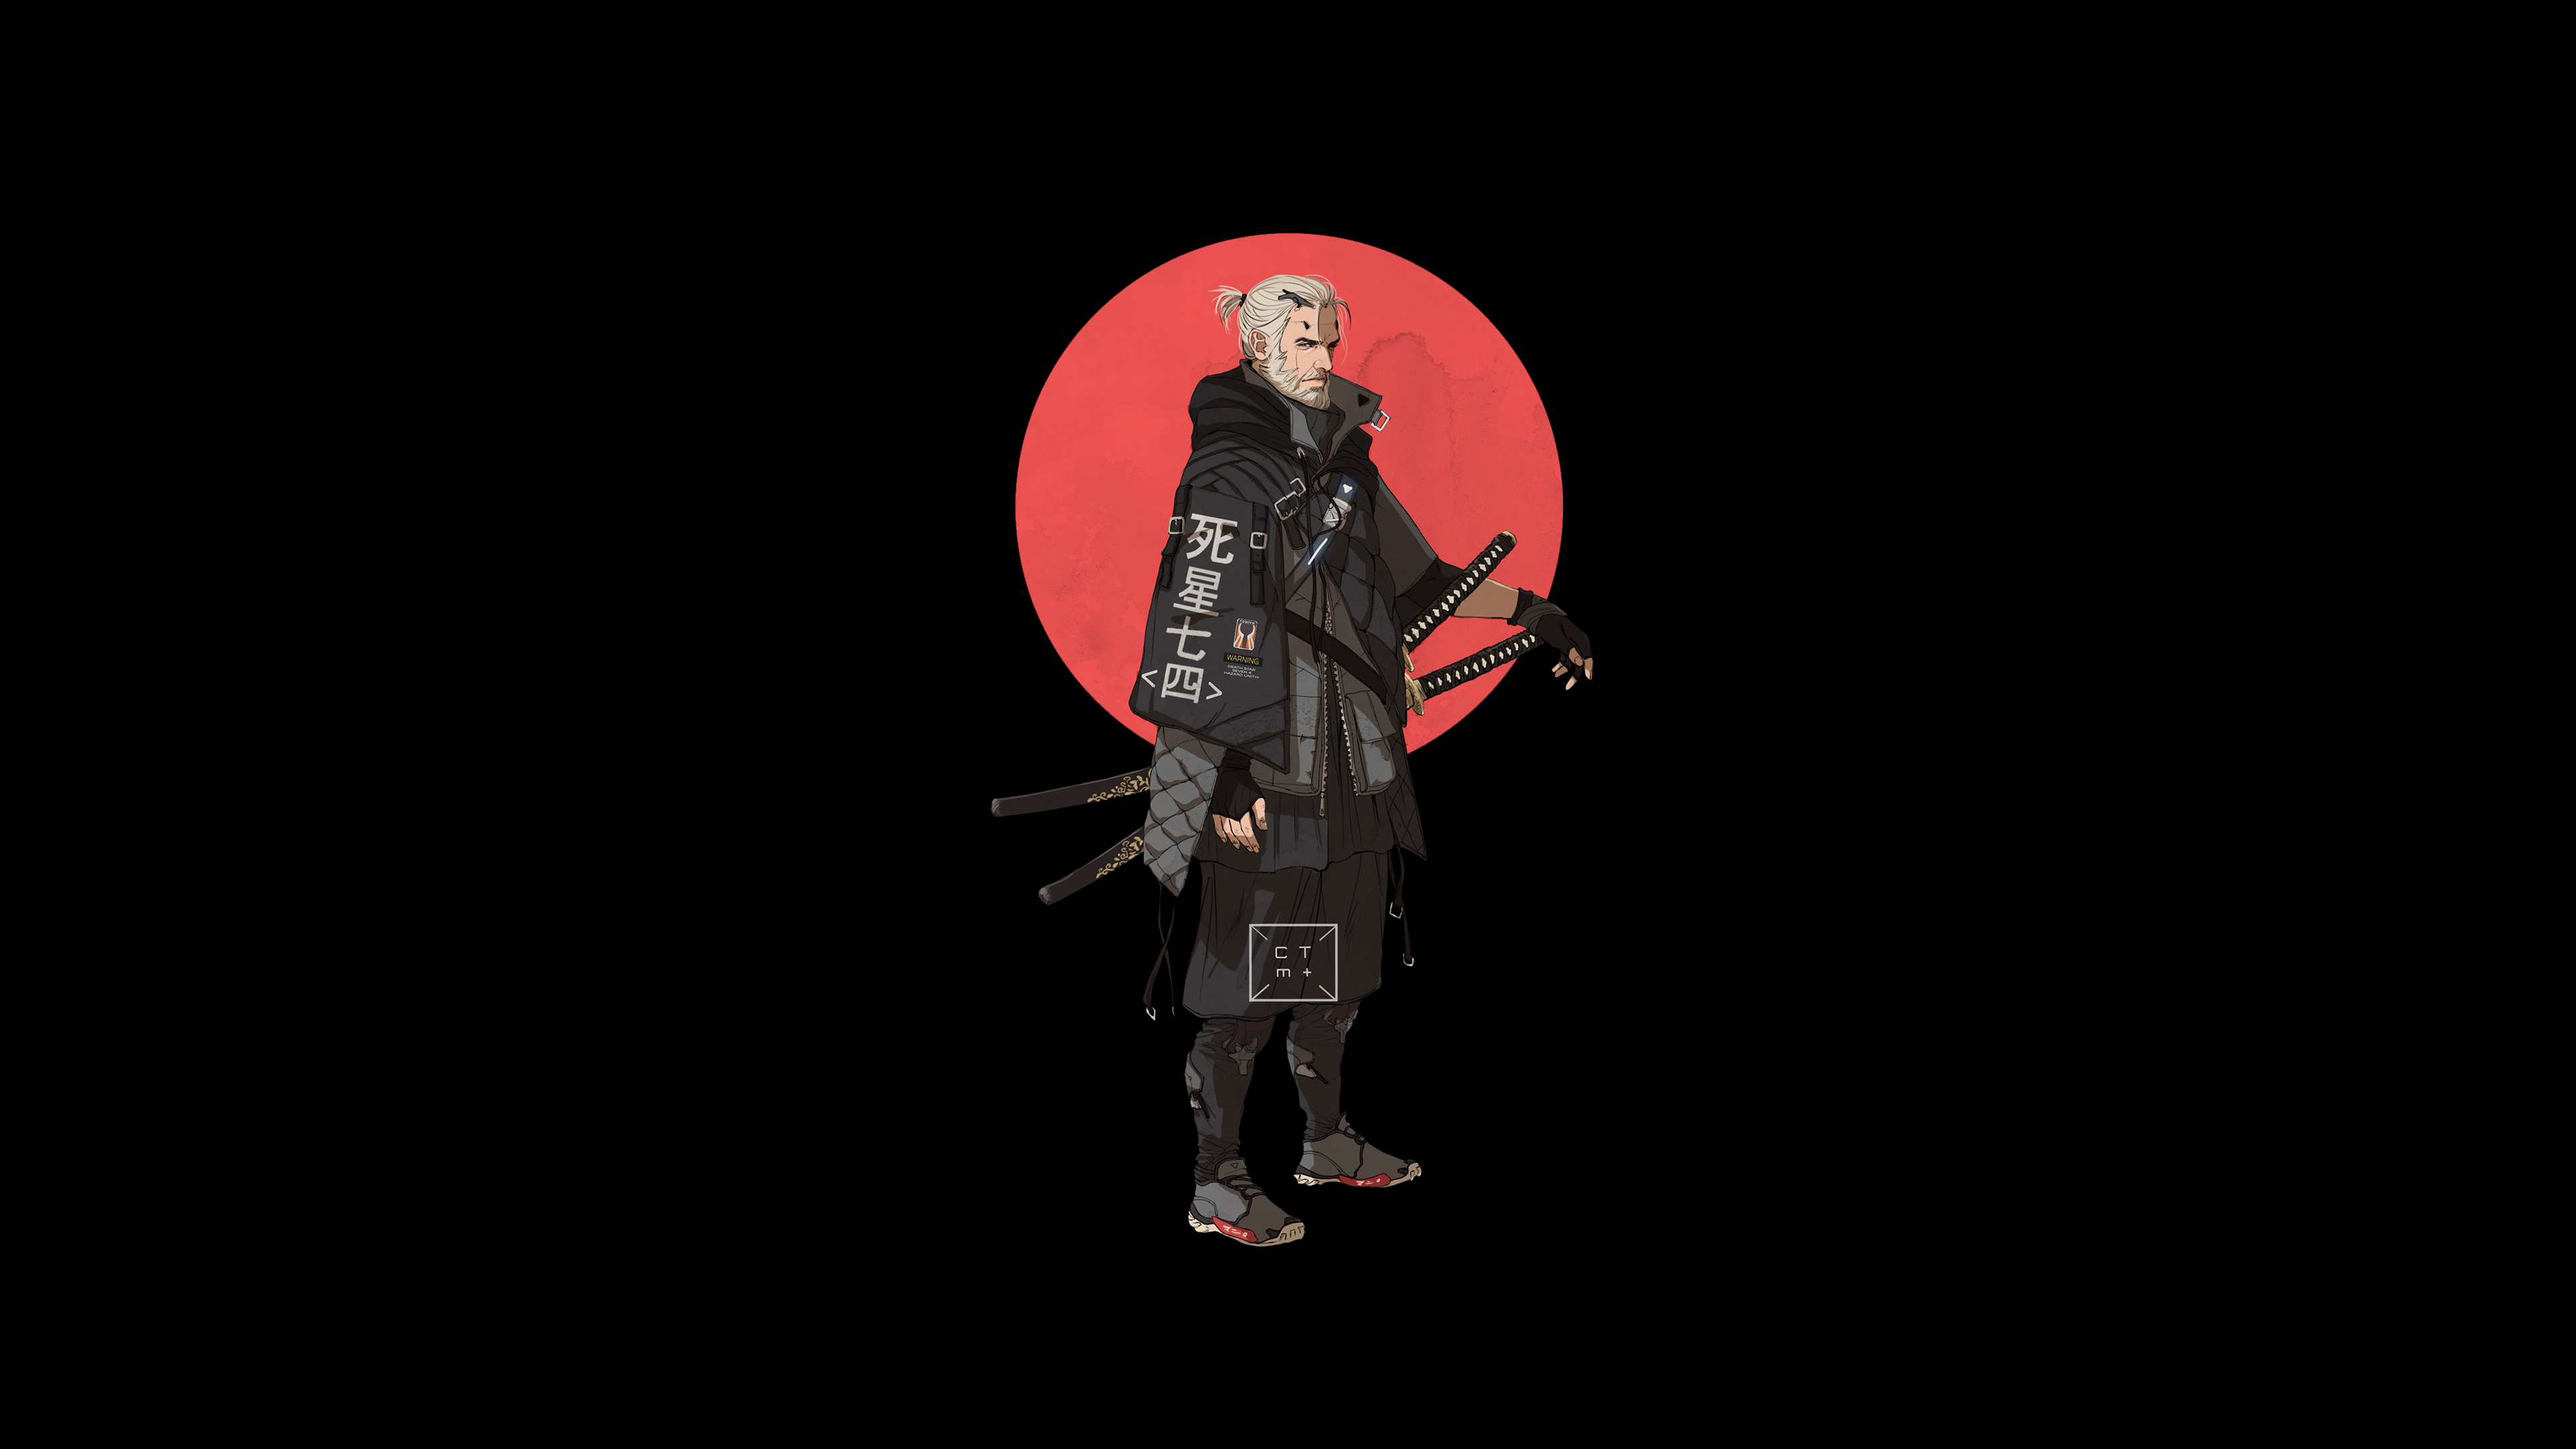 Geralt wallpaper en 2020 (avec image)